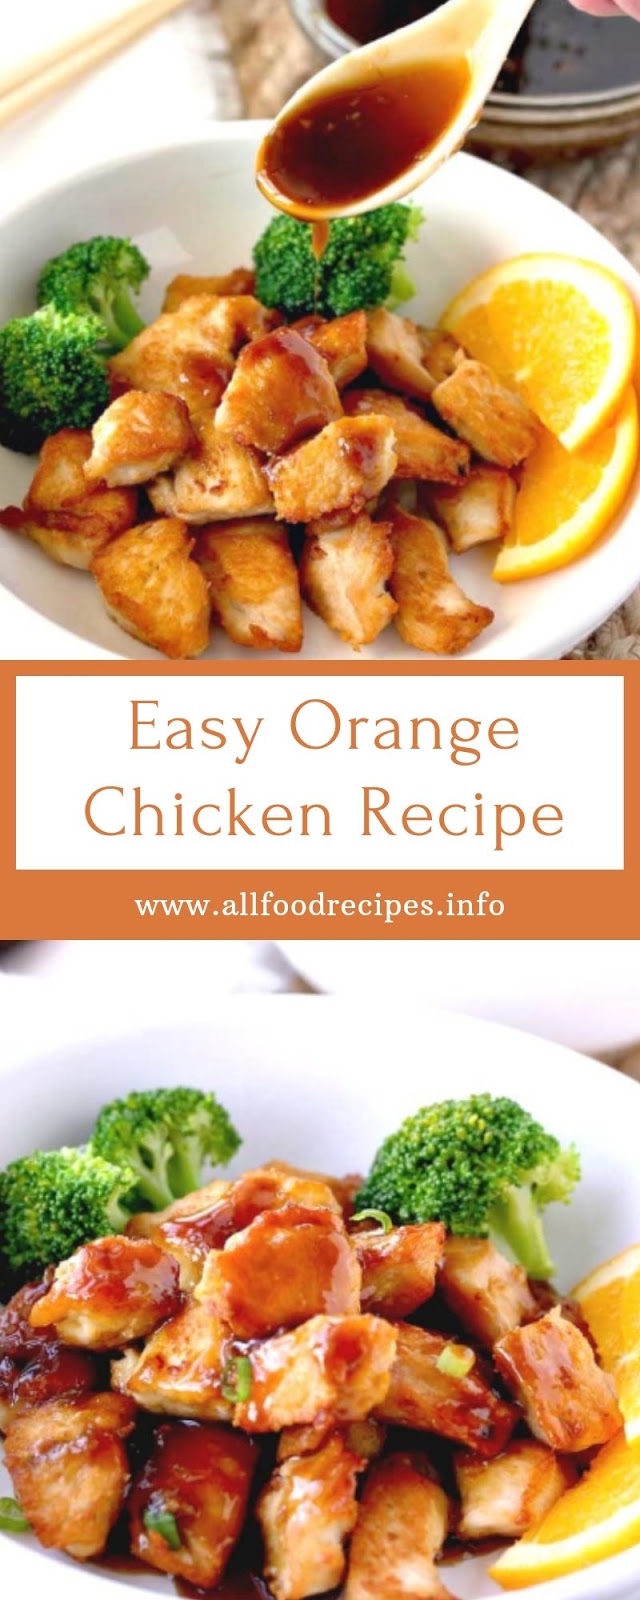 Easy Orange Chicken Recipe - All food recipes